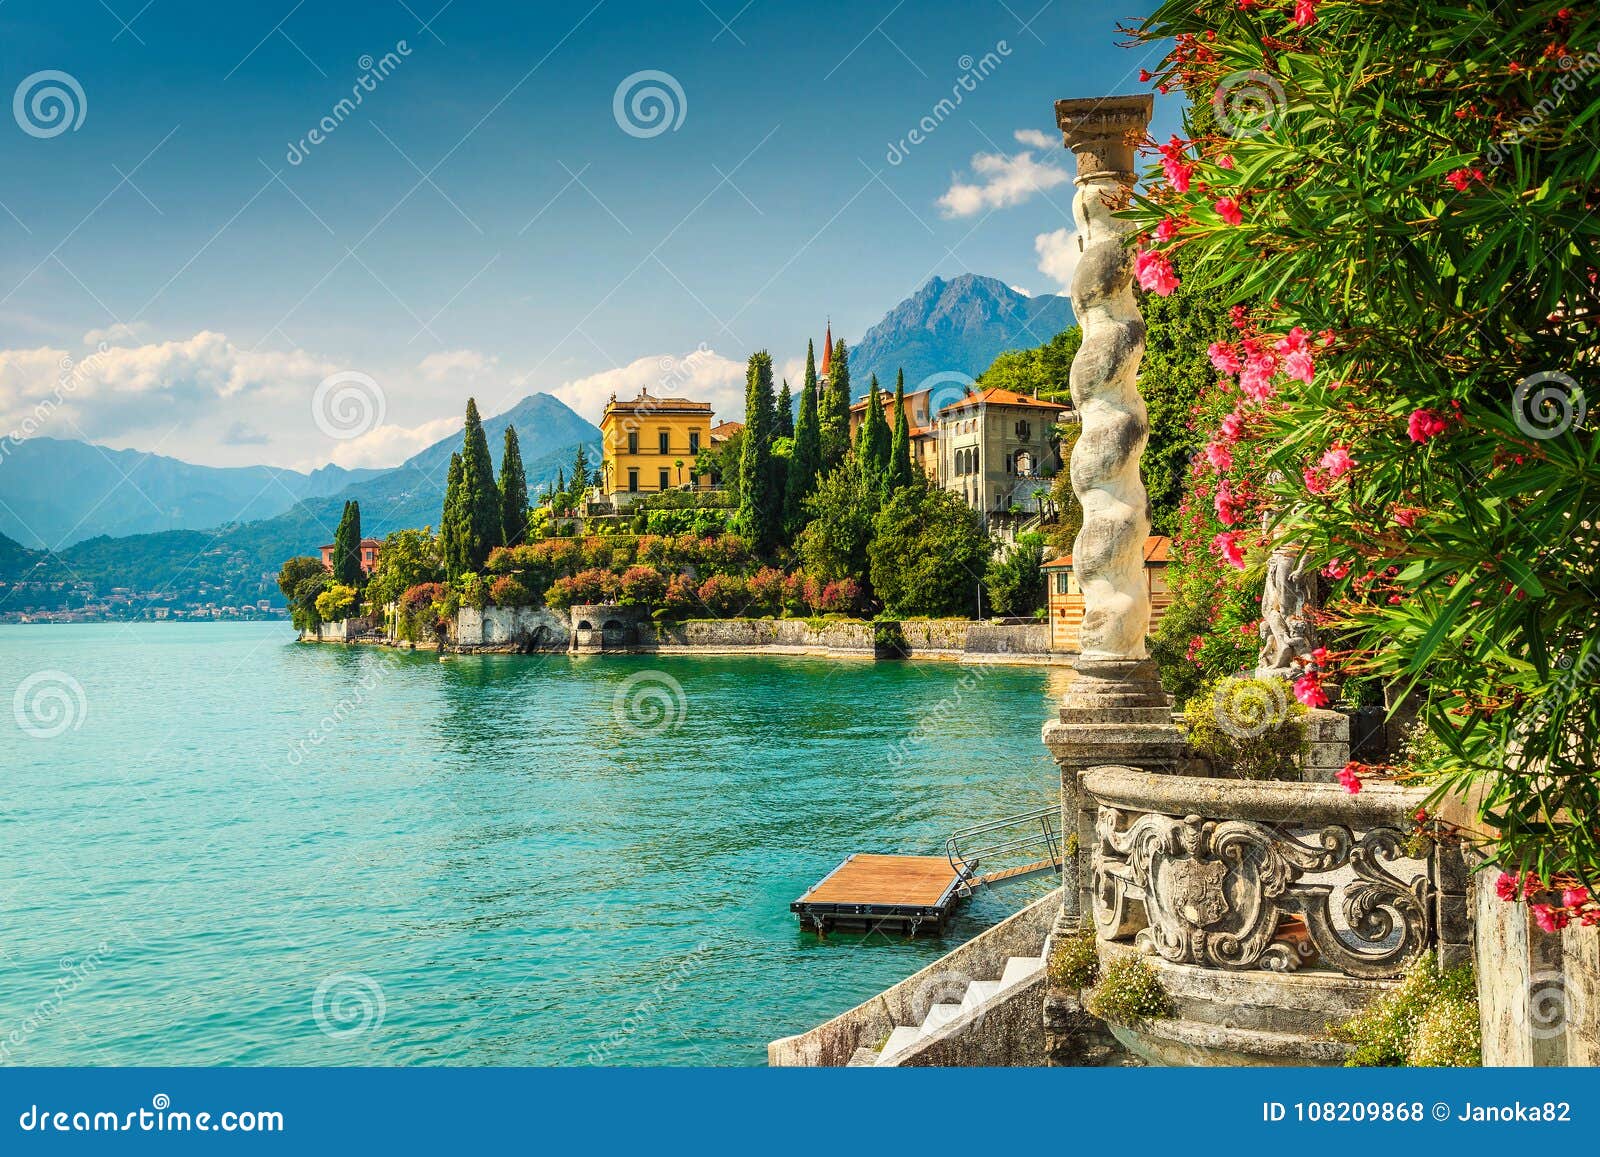 oleander flowers and villa monastero in background, lake como, varenna